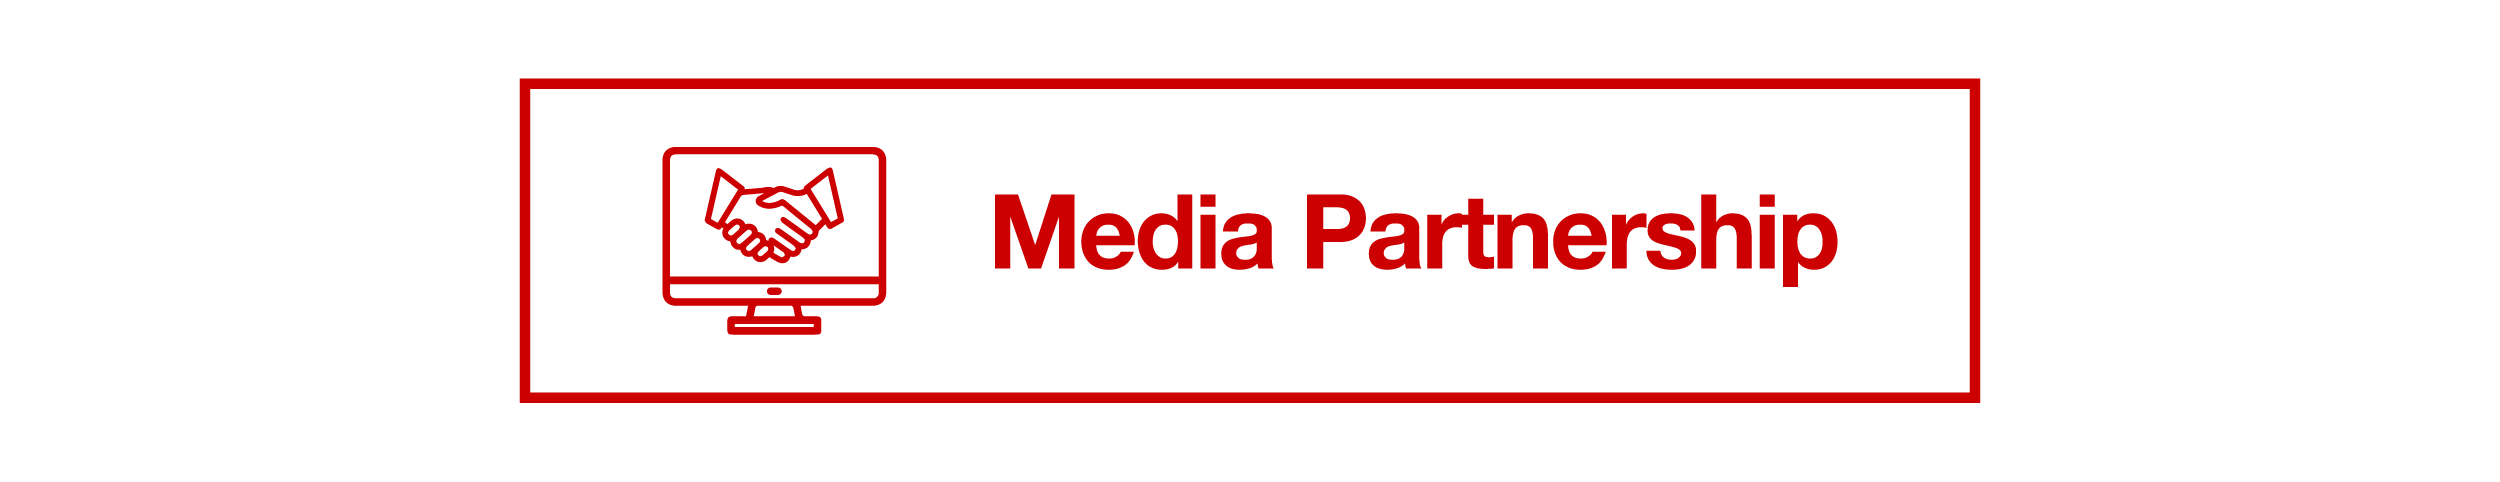 media partnership